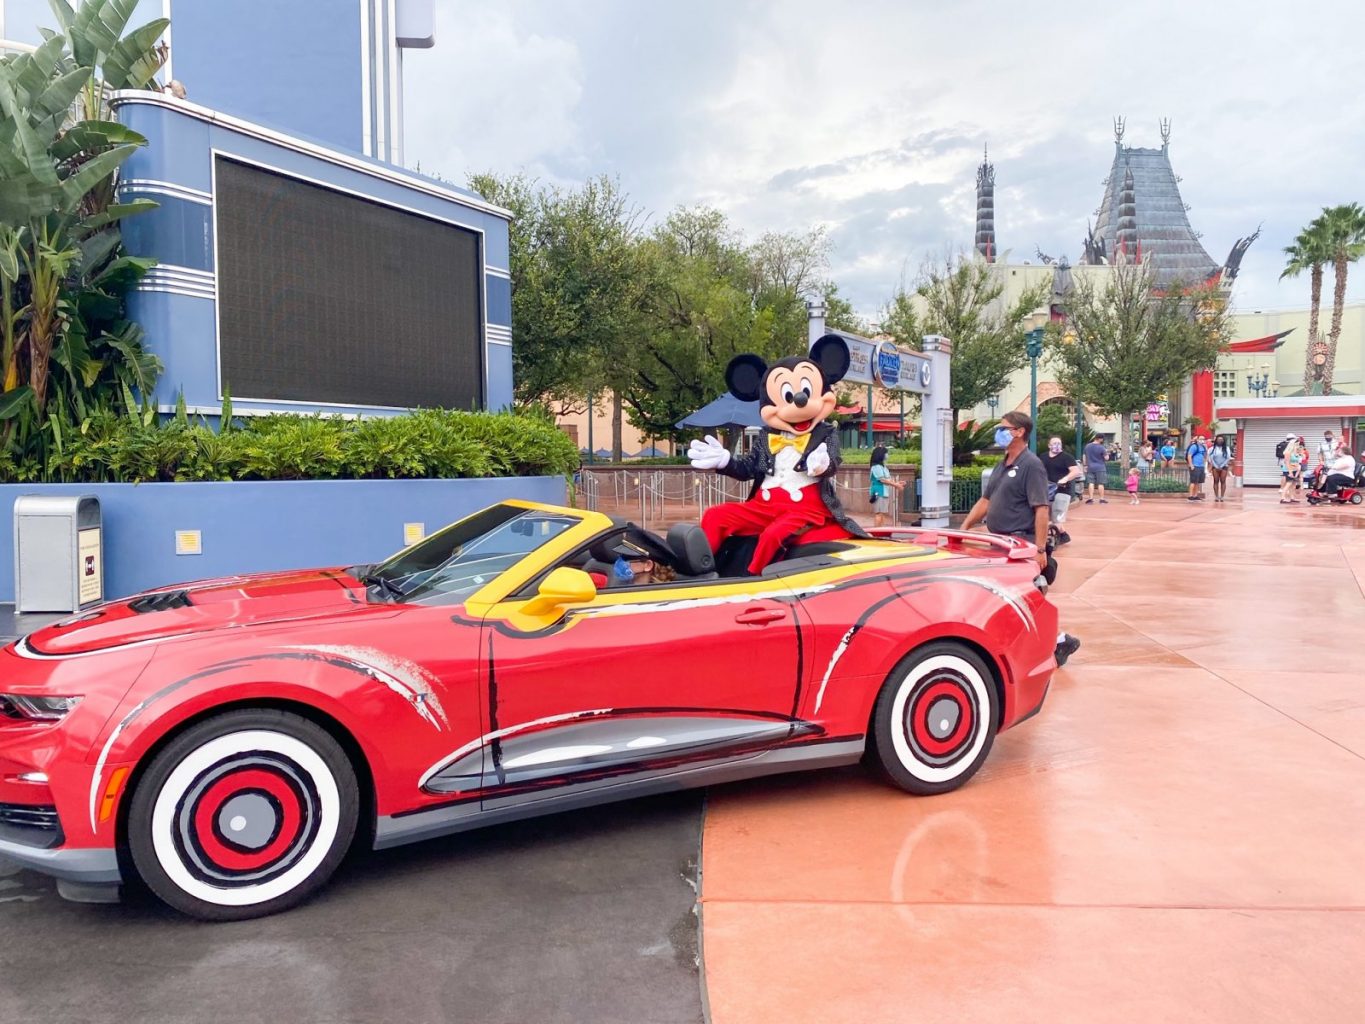 Mickey Mouse riding a car at Hollywood Studios